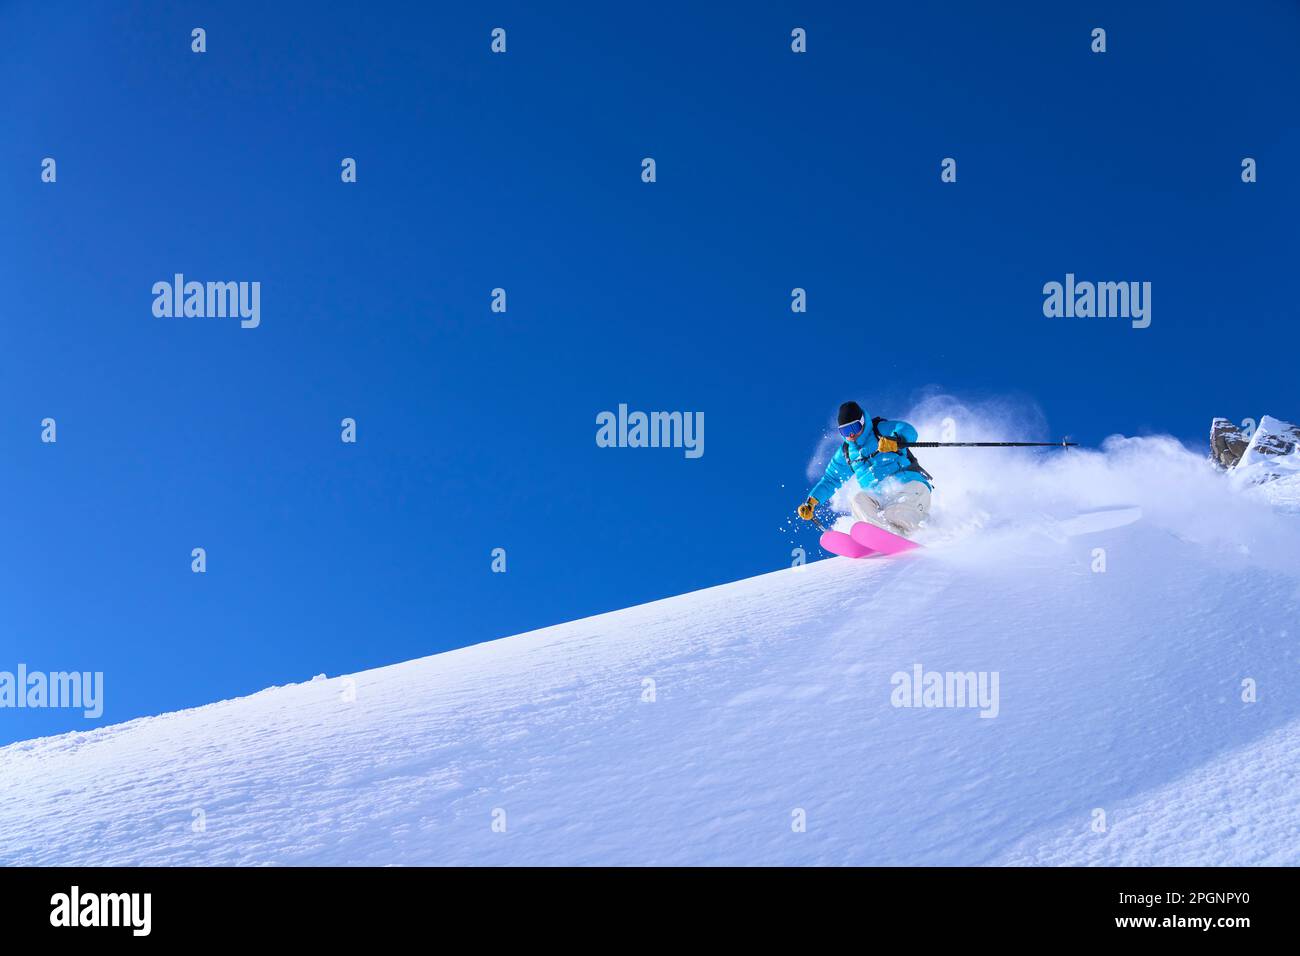 Man wearing skies skiing on snow Stock Photo